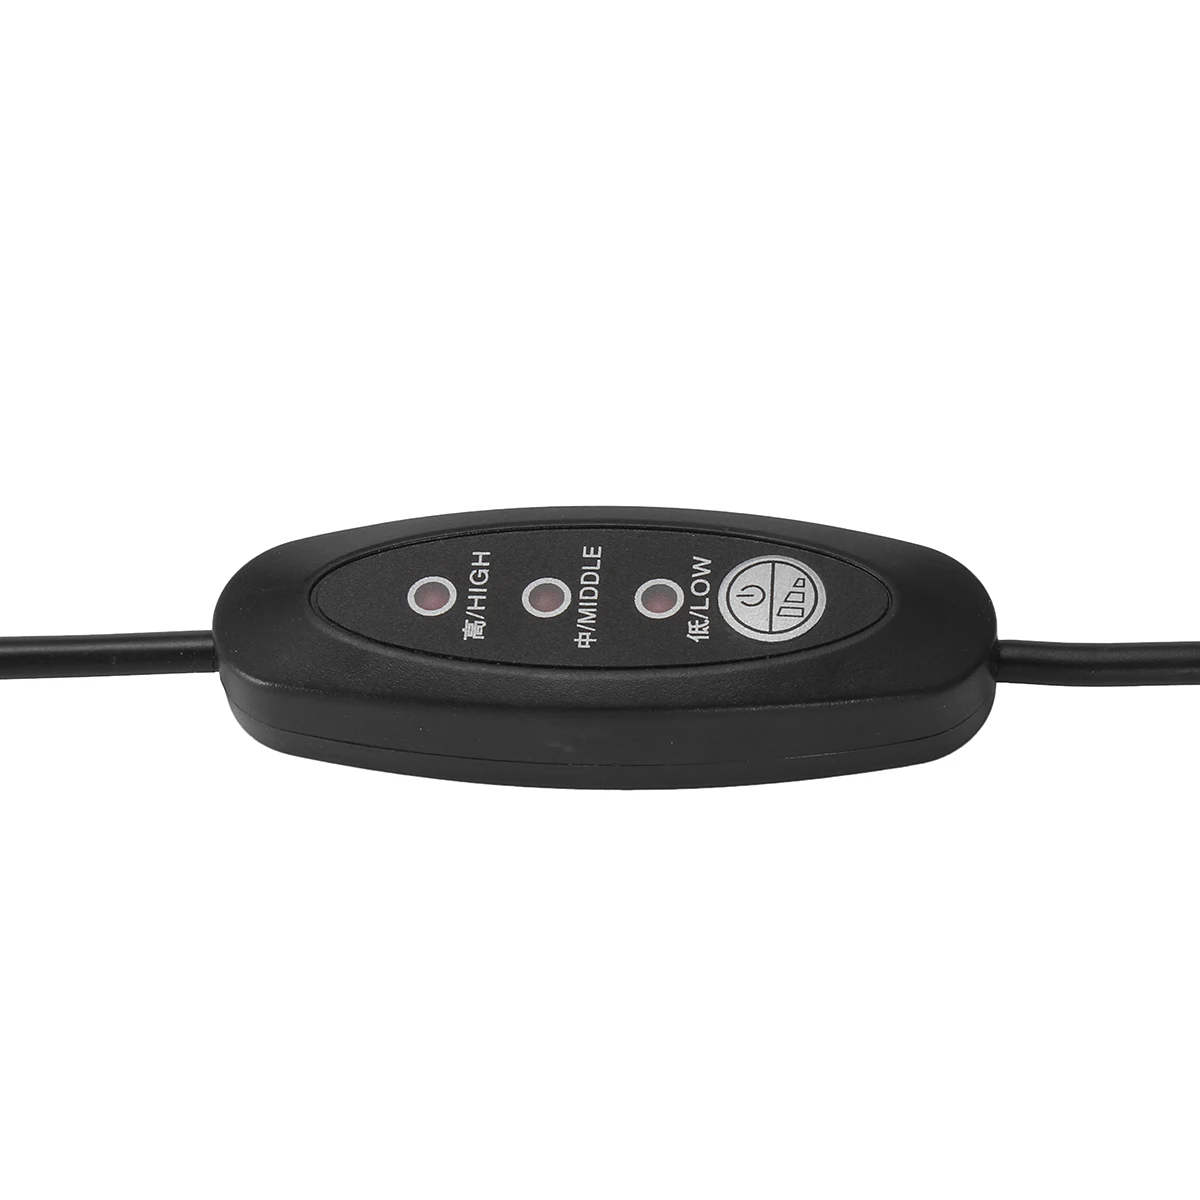 USB 5 V-12 V Температура контроллер обогреватель термостат 3 режима скорости 24 Вт 600 мм